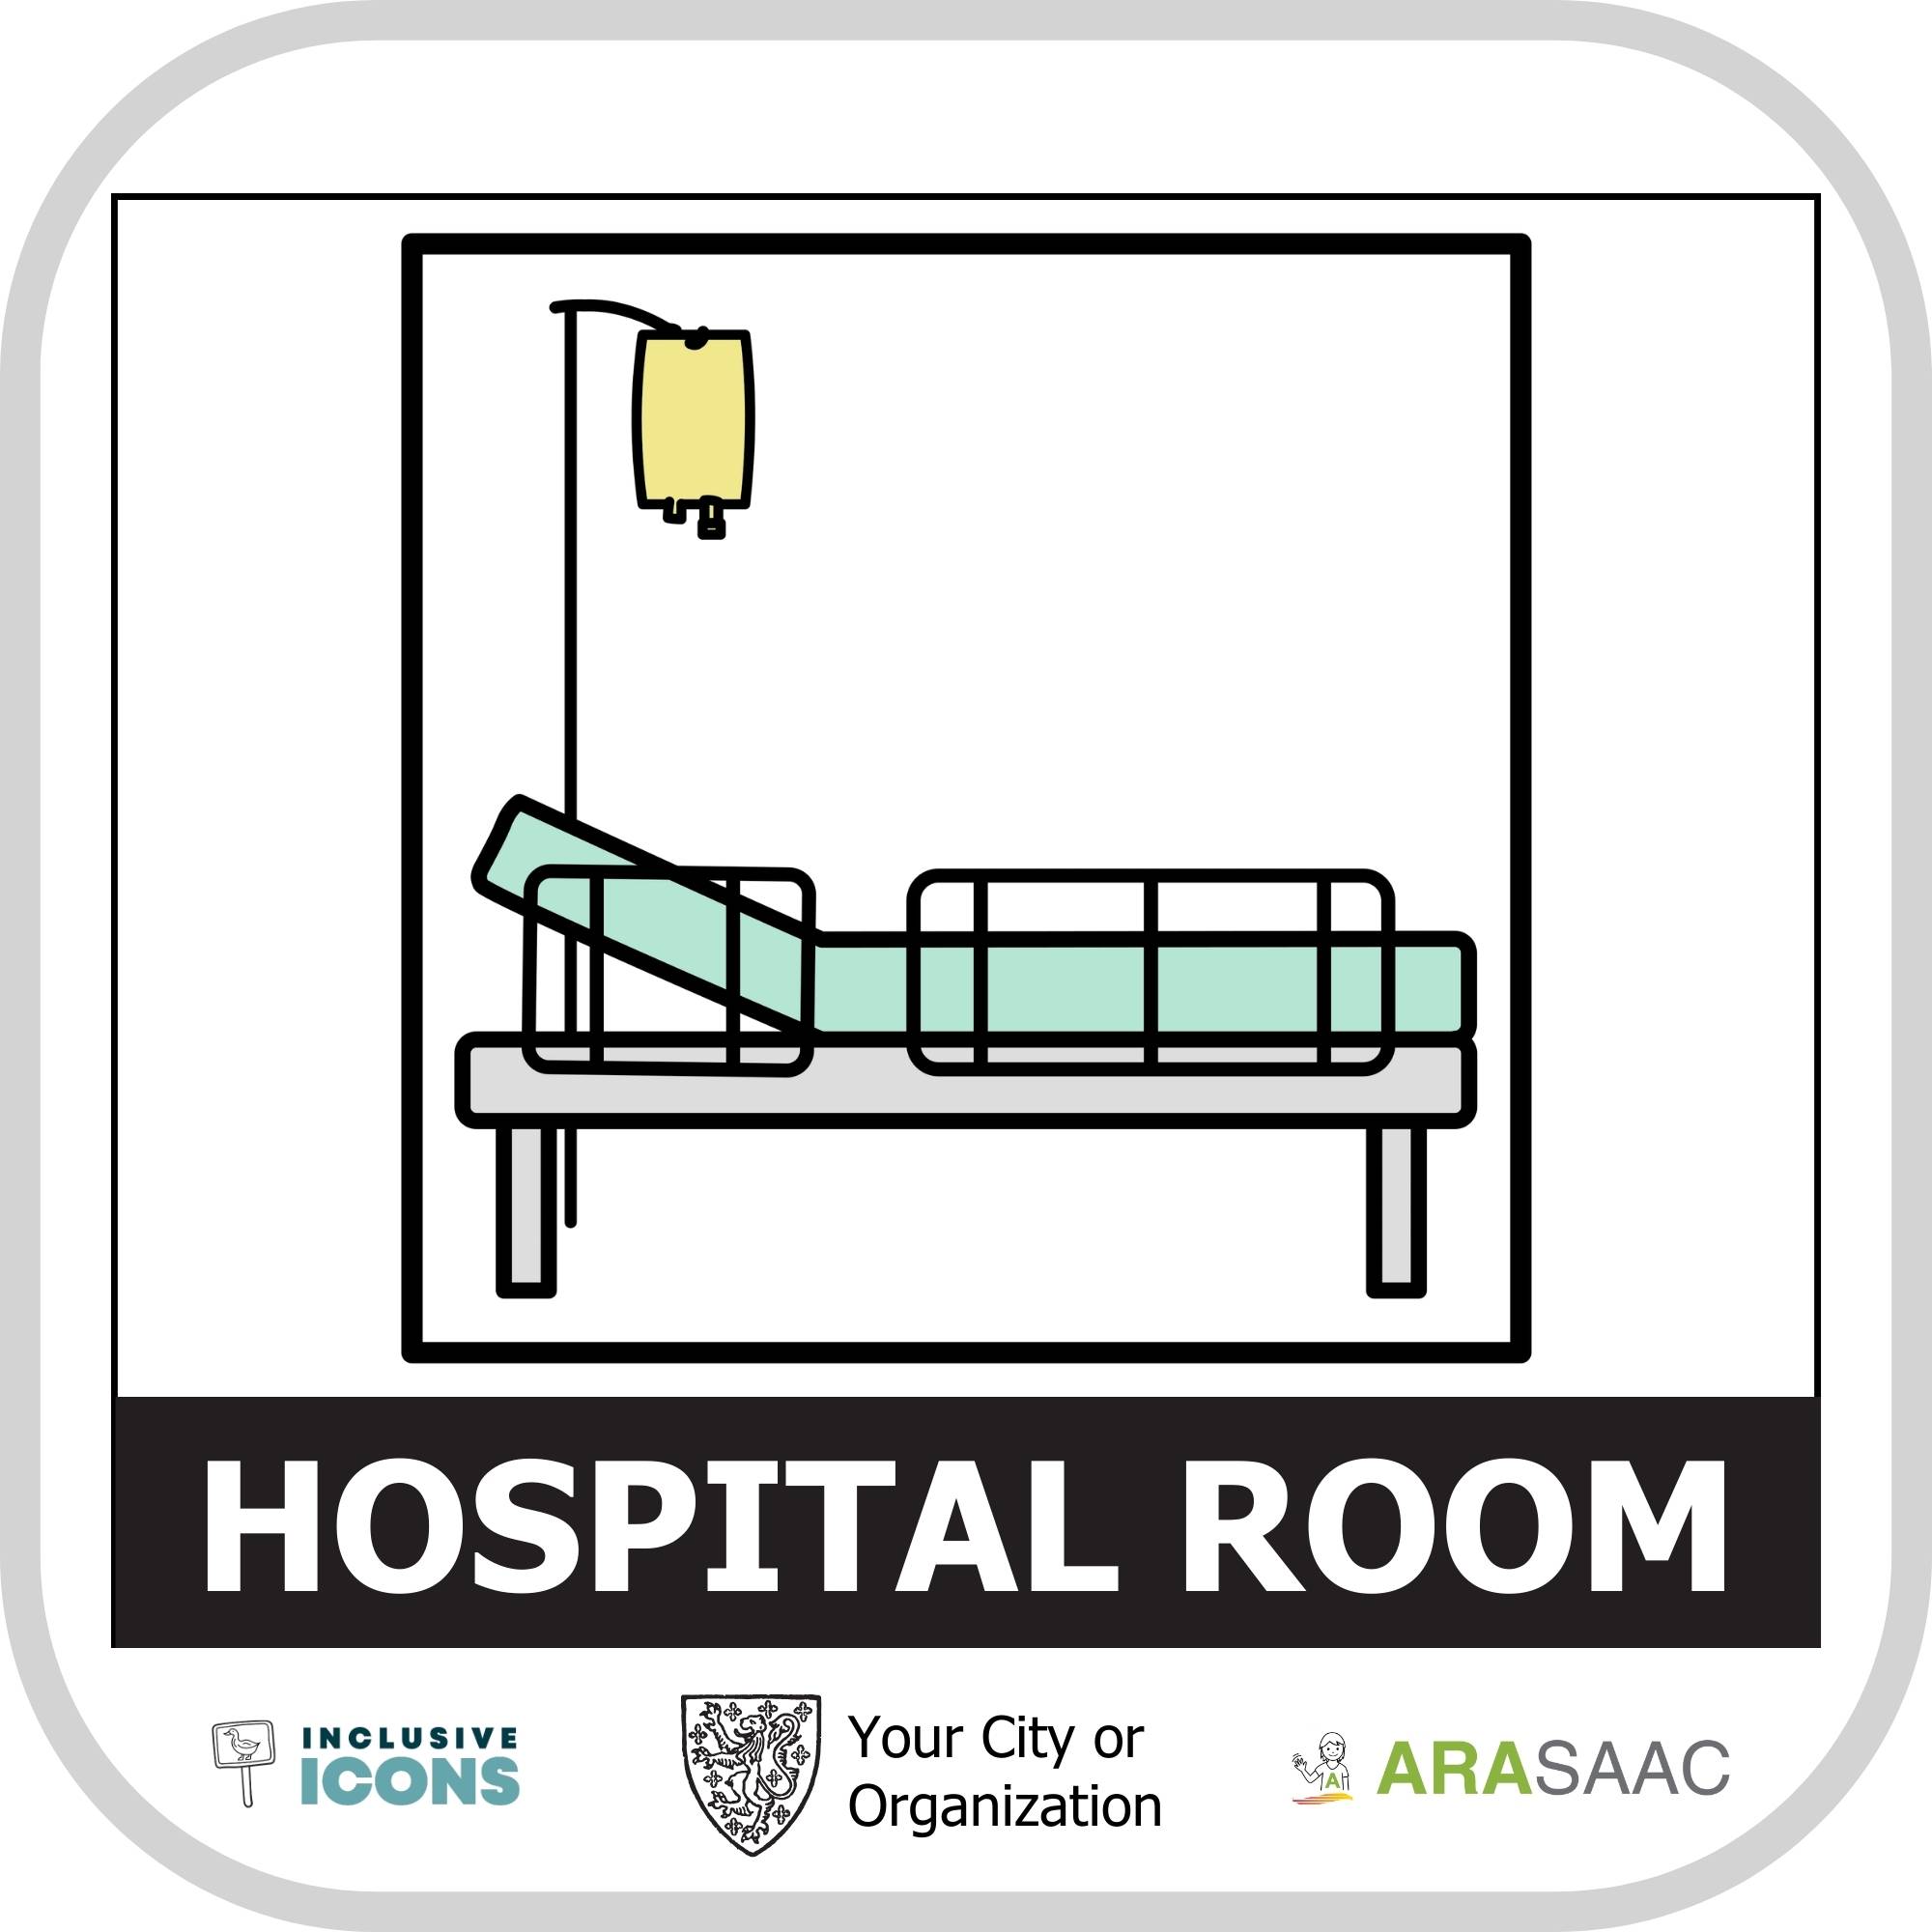 Hospital room sign